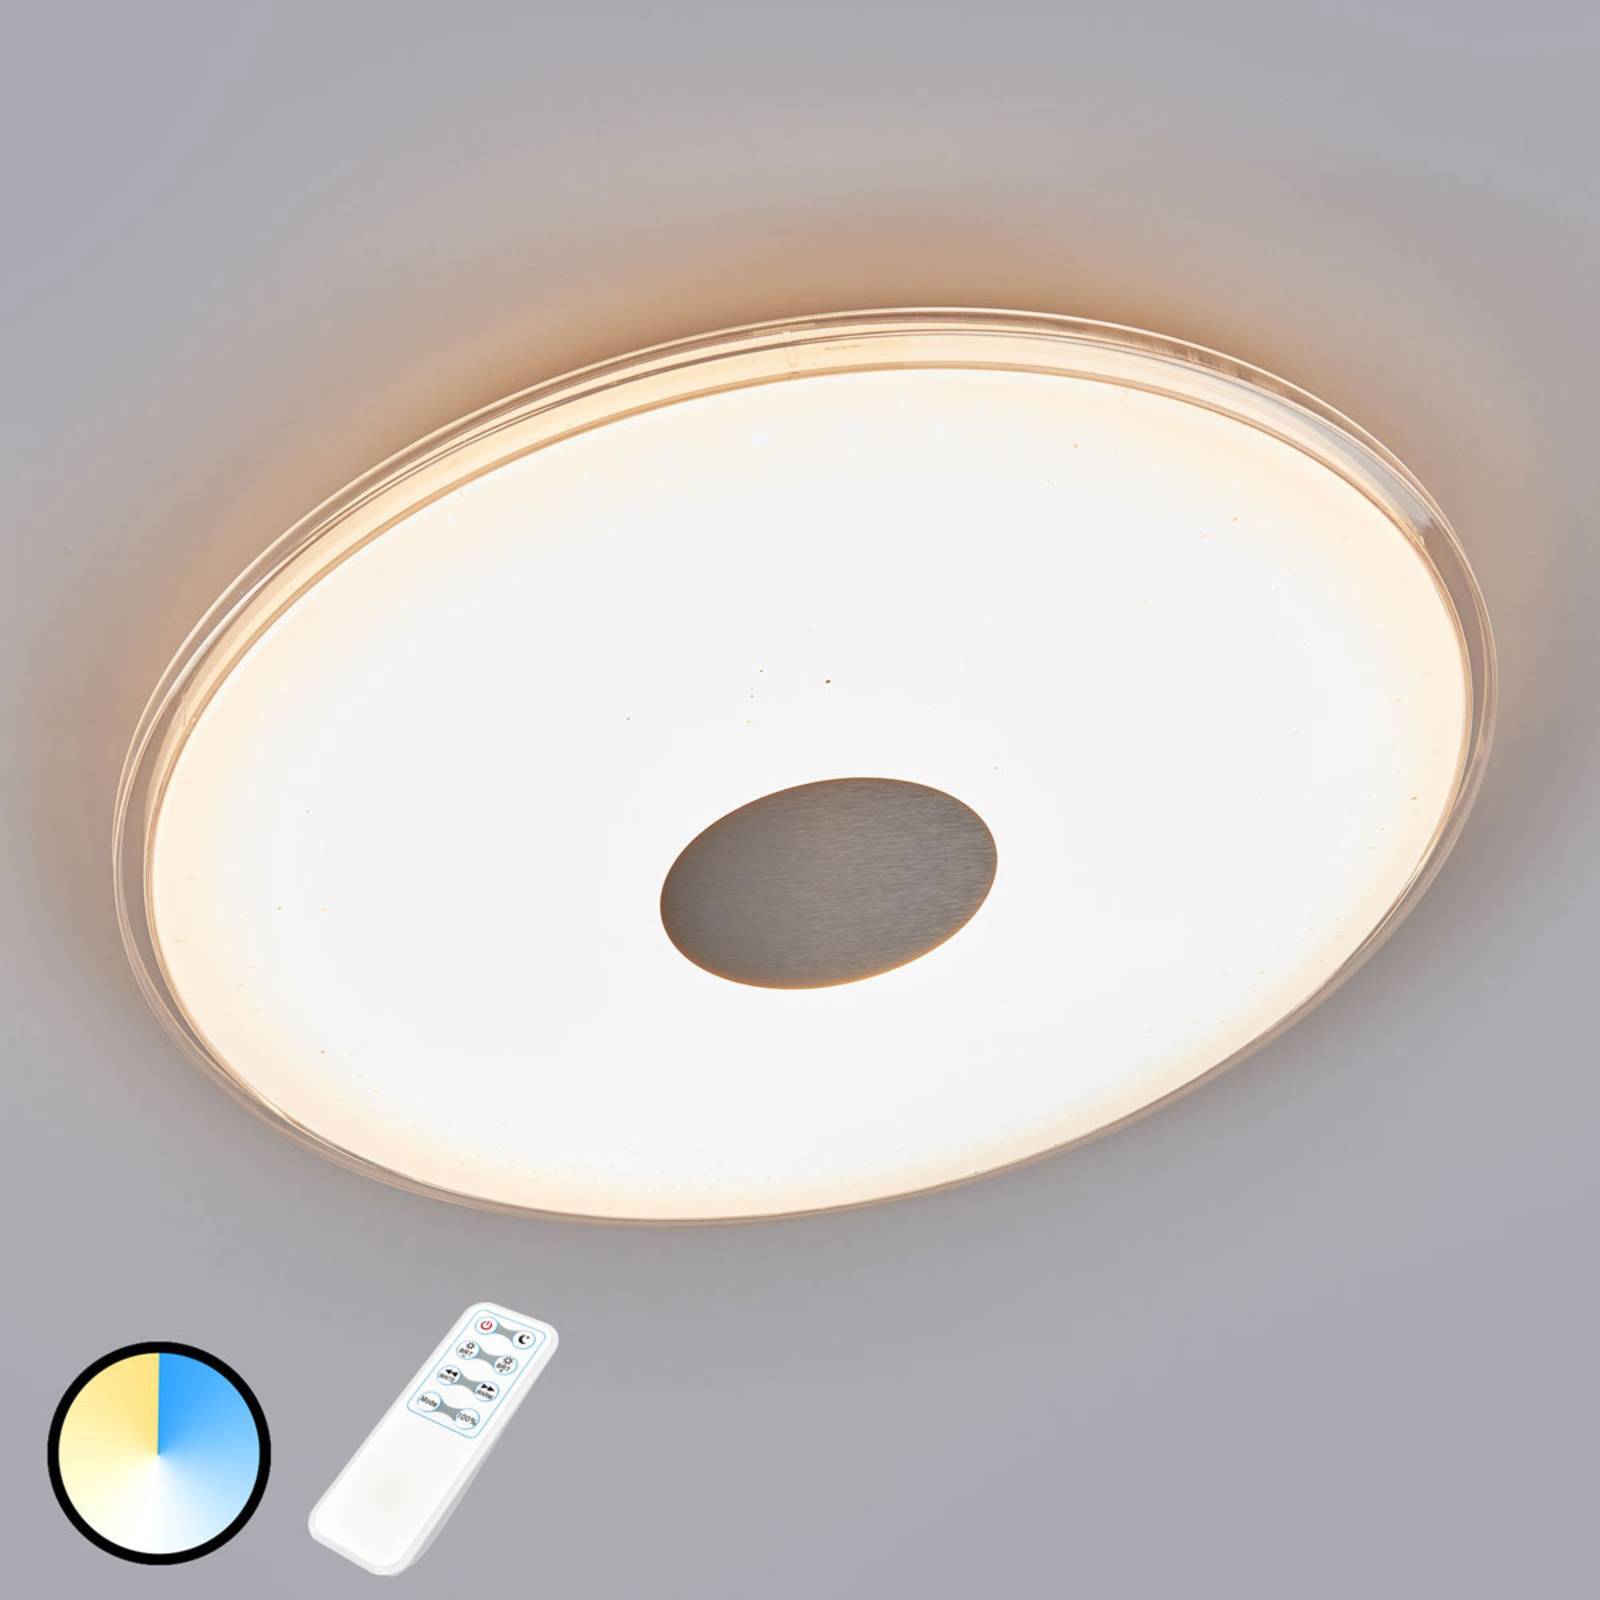 Okrągła lampa sufitowa LED Szogun, efekt skrzenia